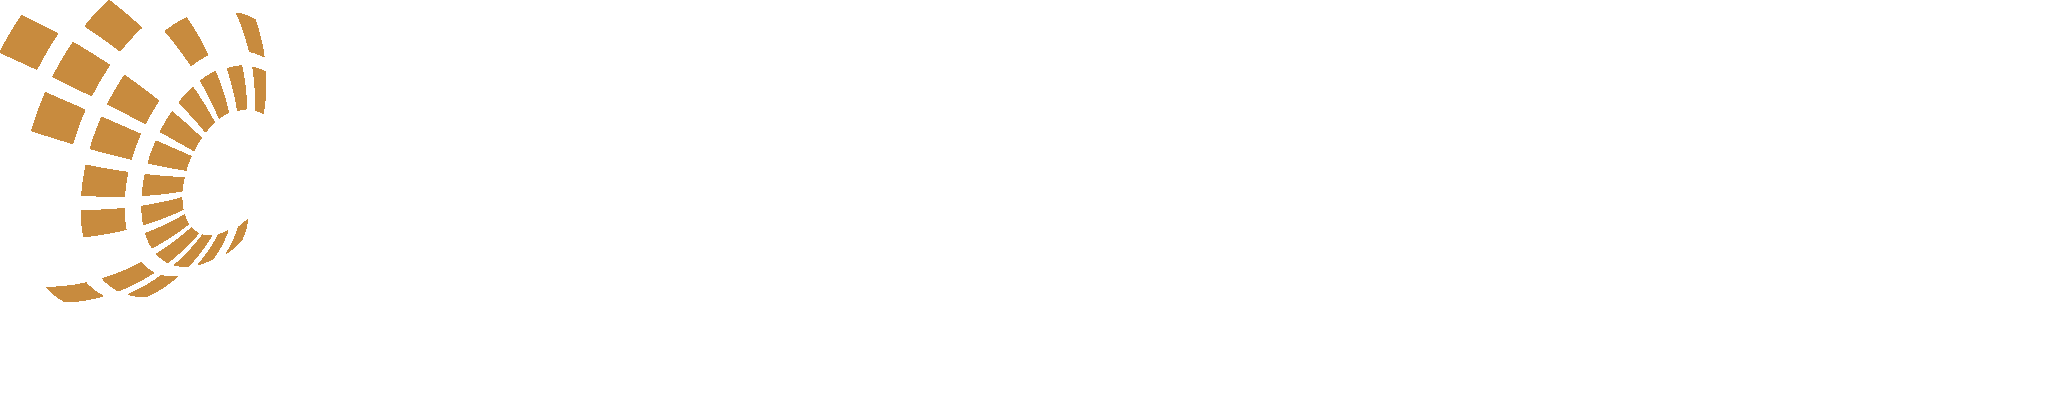 KLO Financial logo